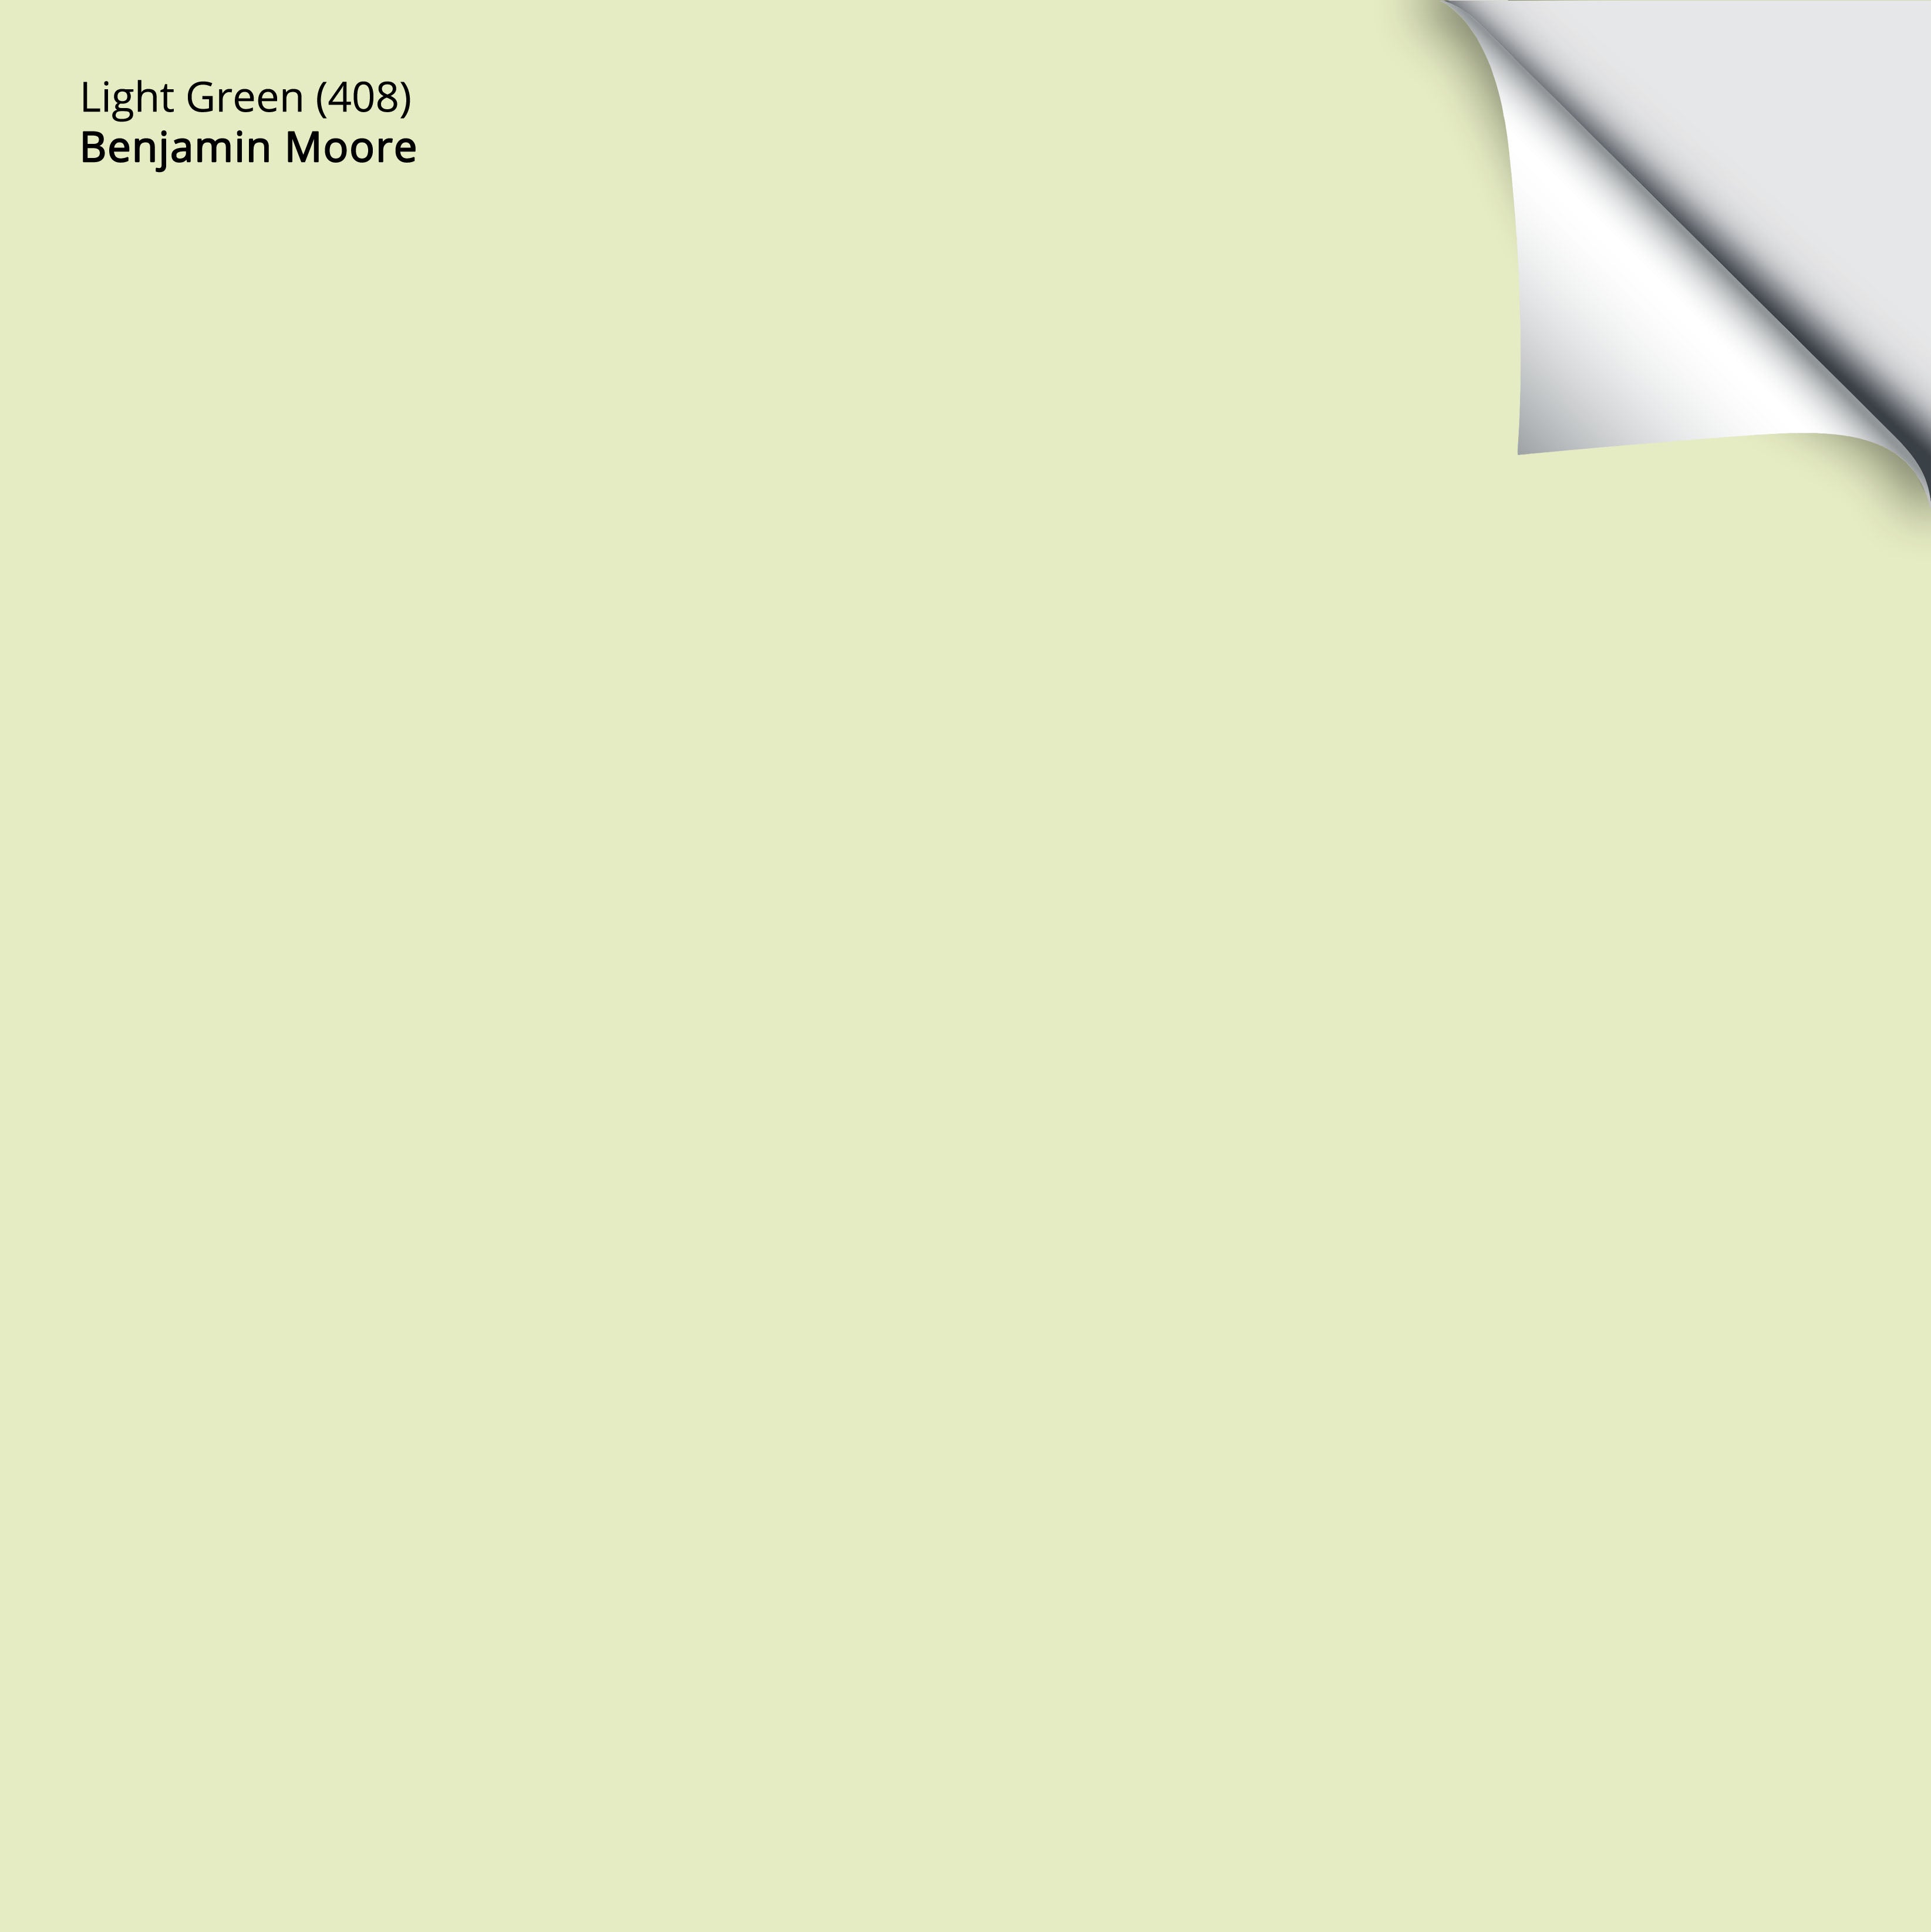 Light Green (408): 9x14.75 – Benjamin Moore x Samplize